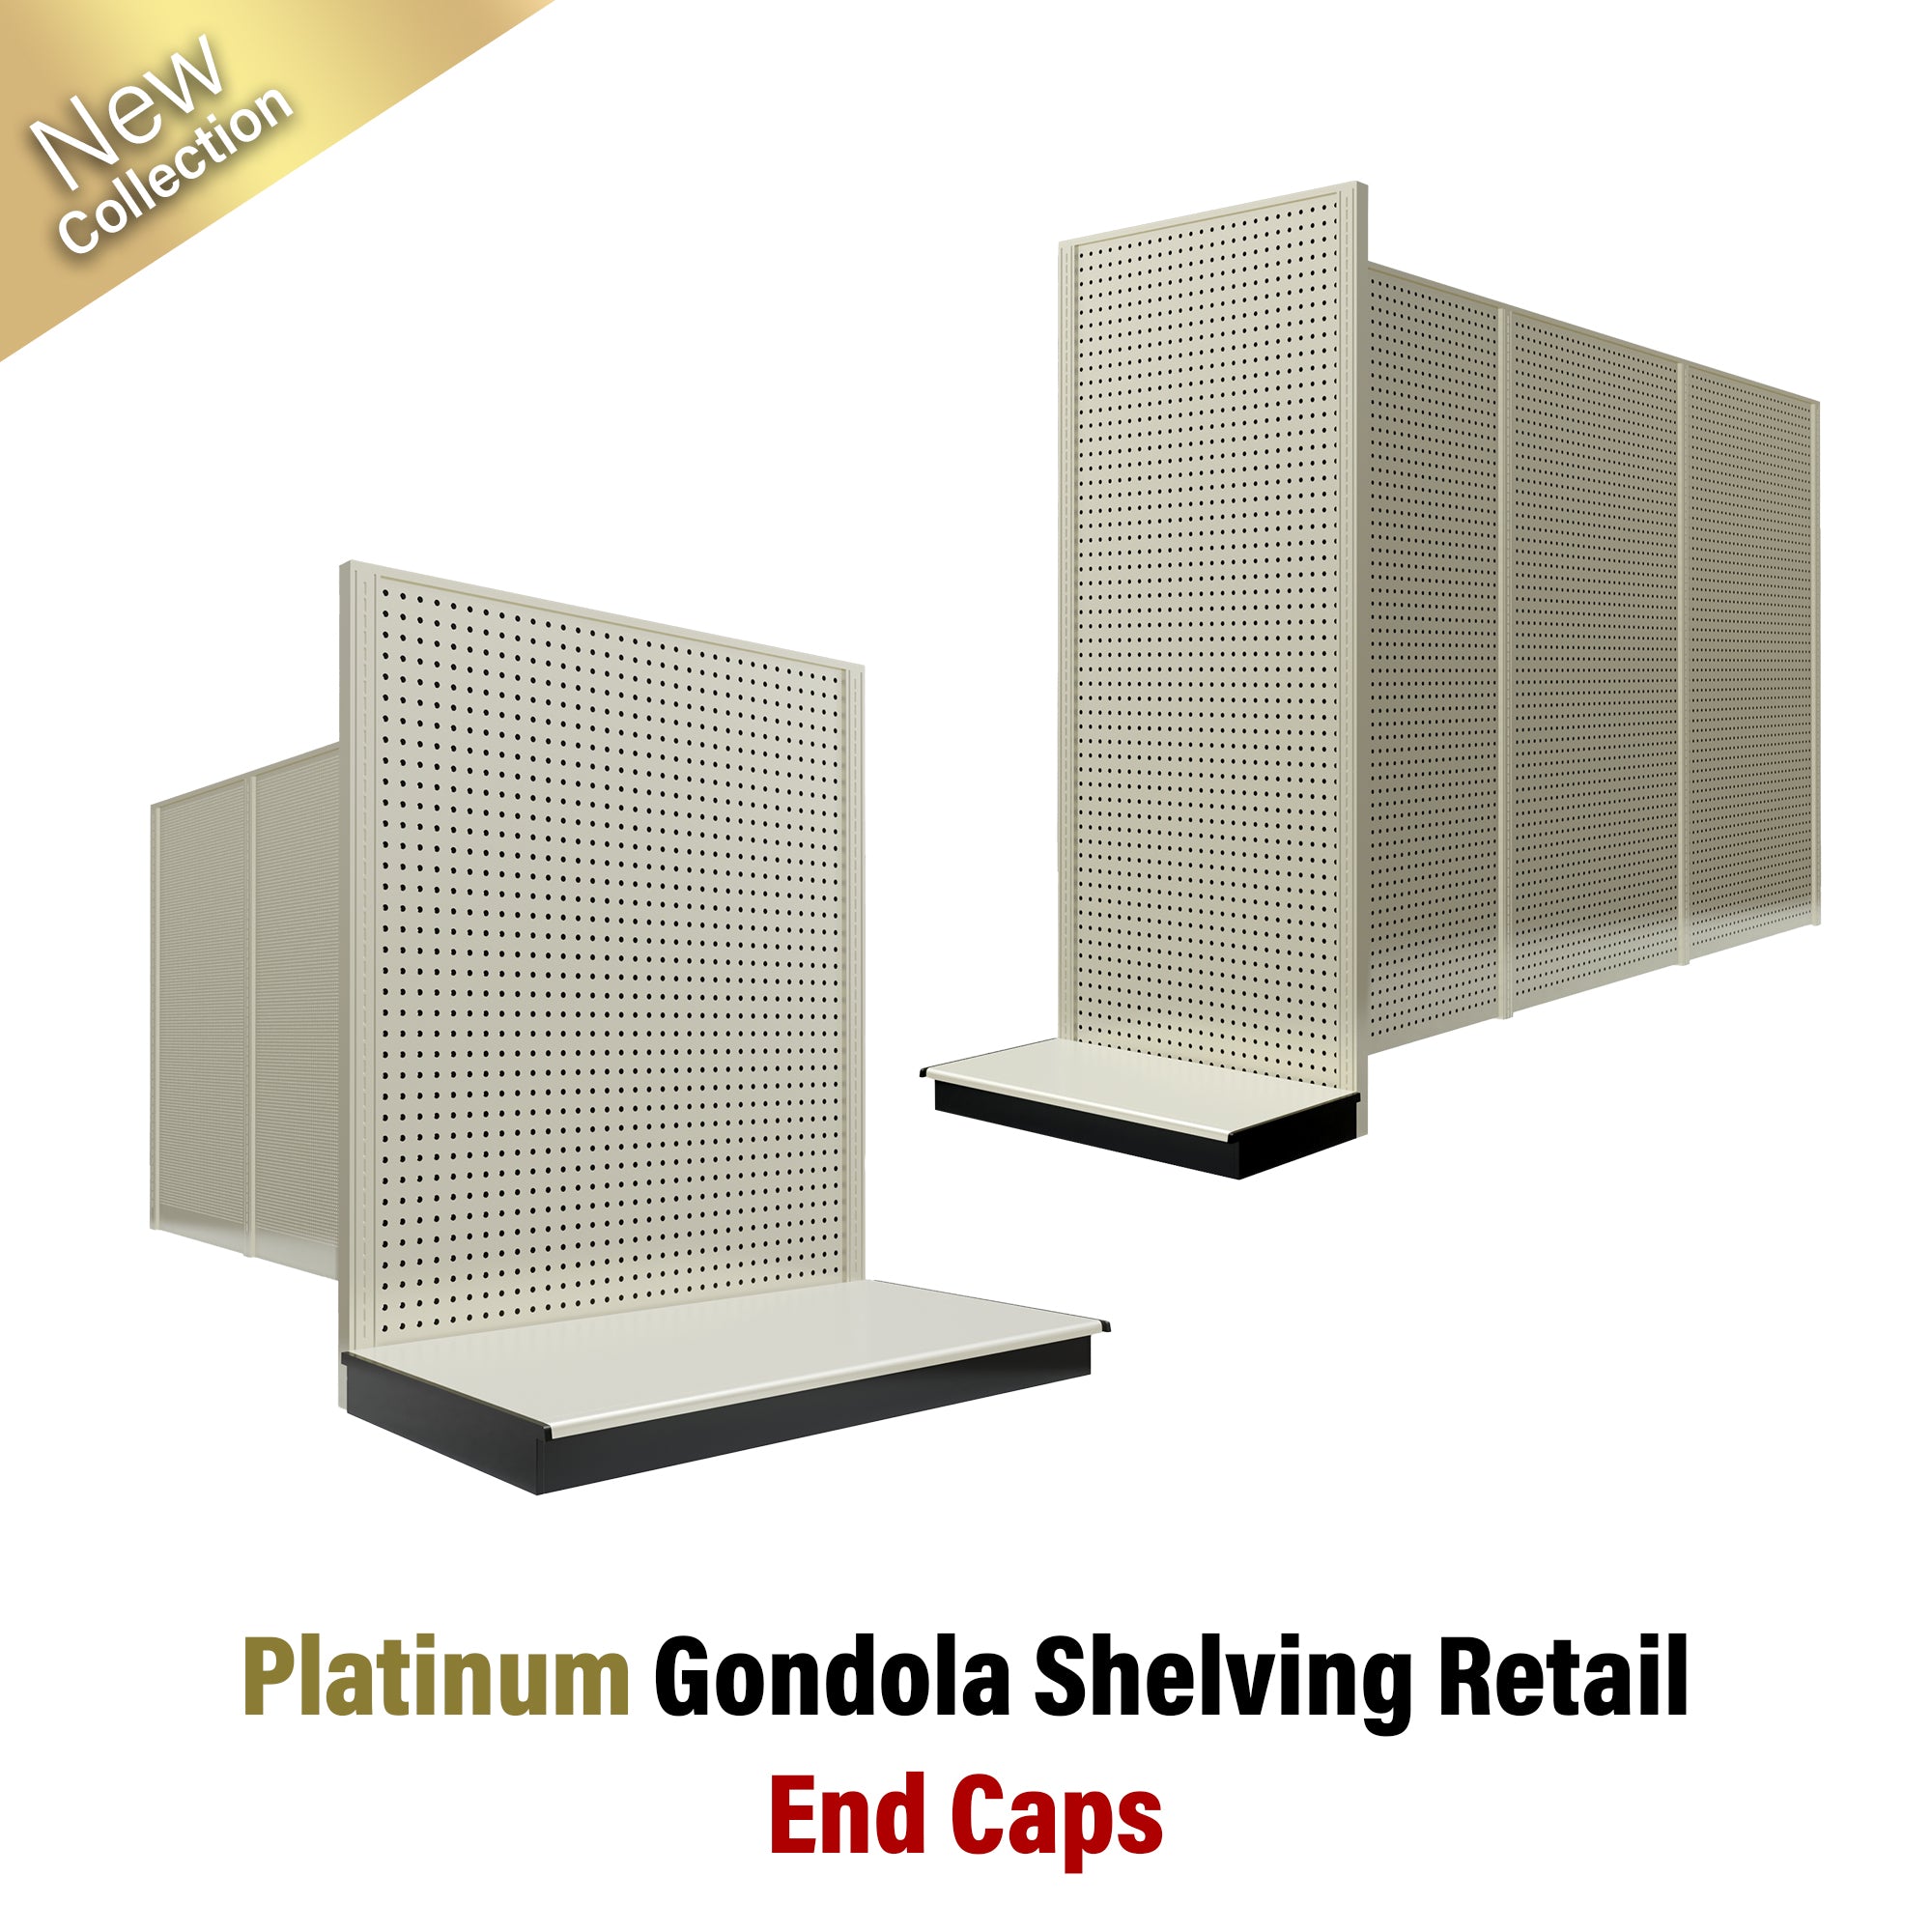 Platinum Gondola Shelving Retail End Caps